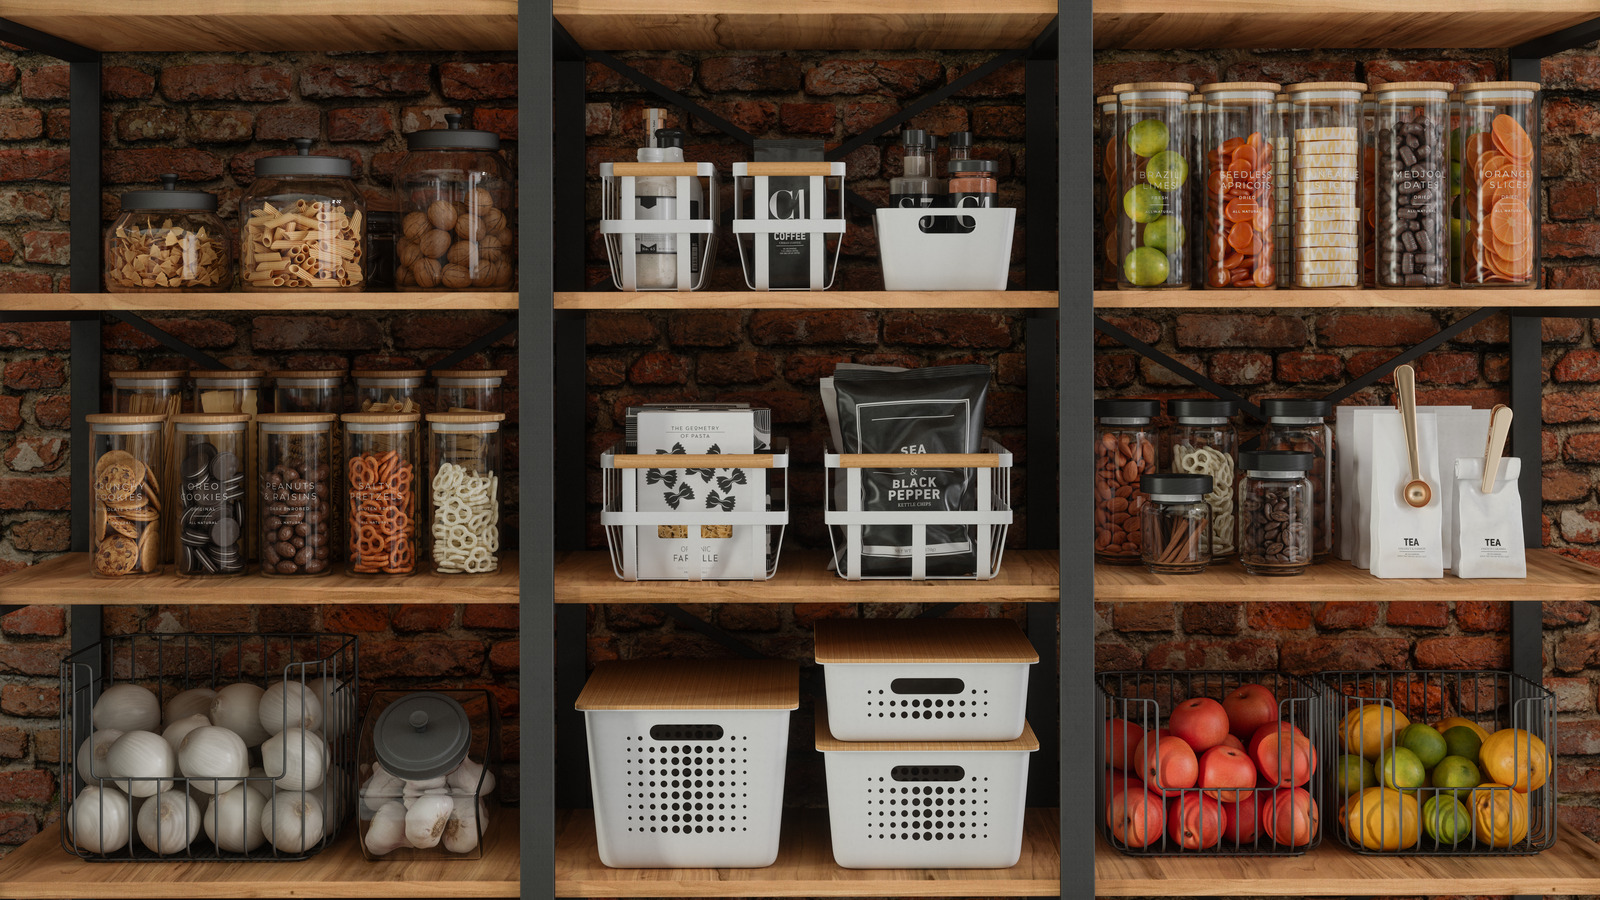 DIY Dollar Tree Baskets and Shelf Organization - KatiesKottage